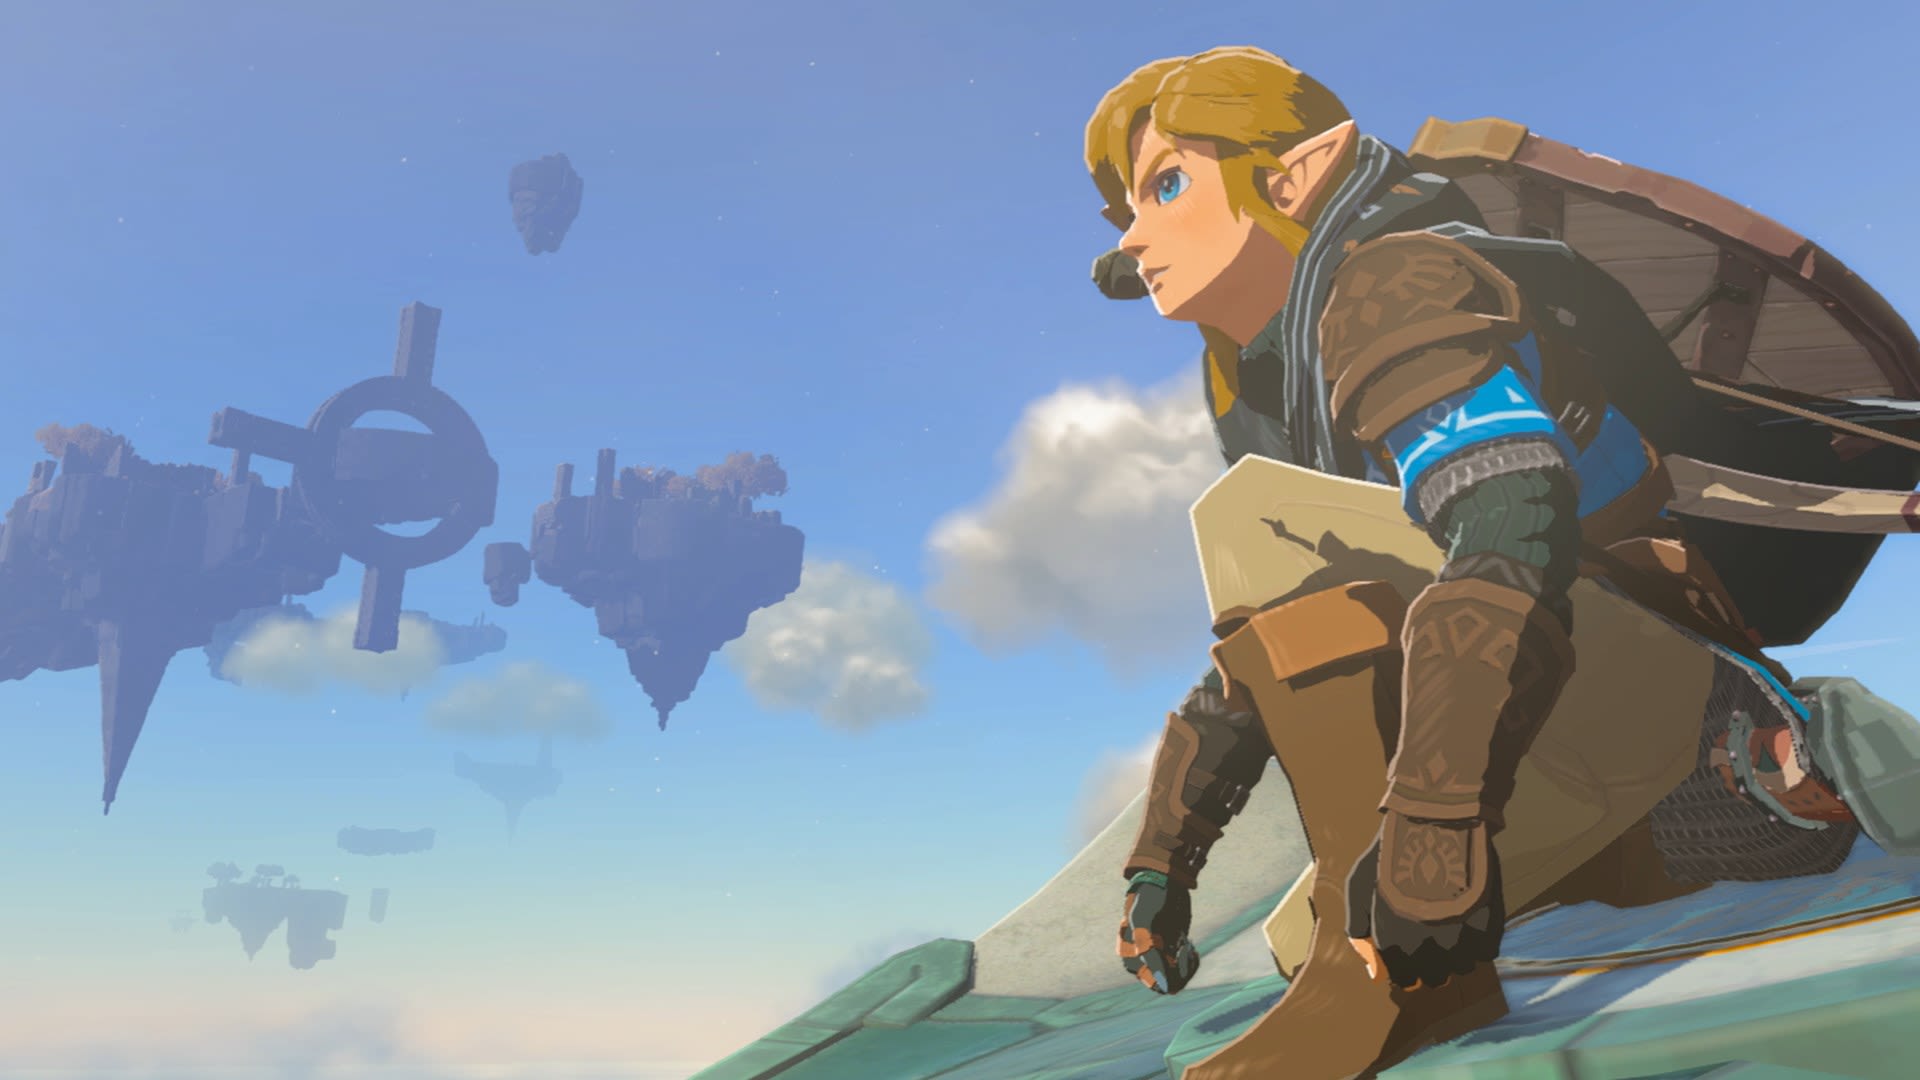 The Legend Of Zelda Review – Nintendo Times